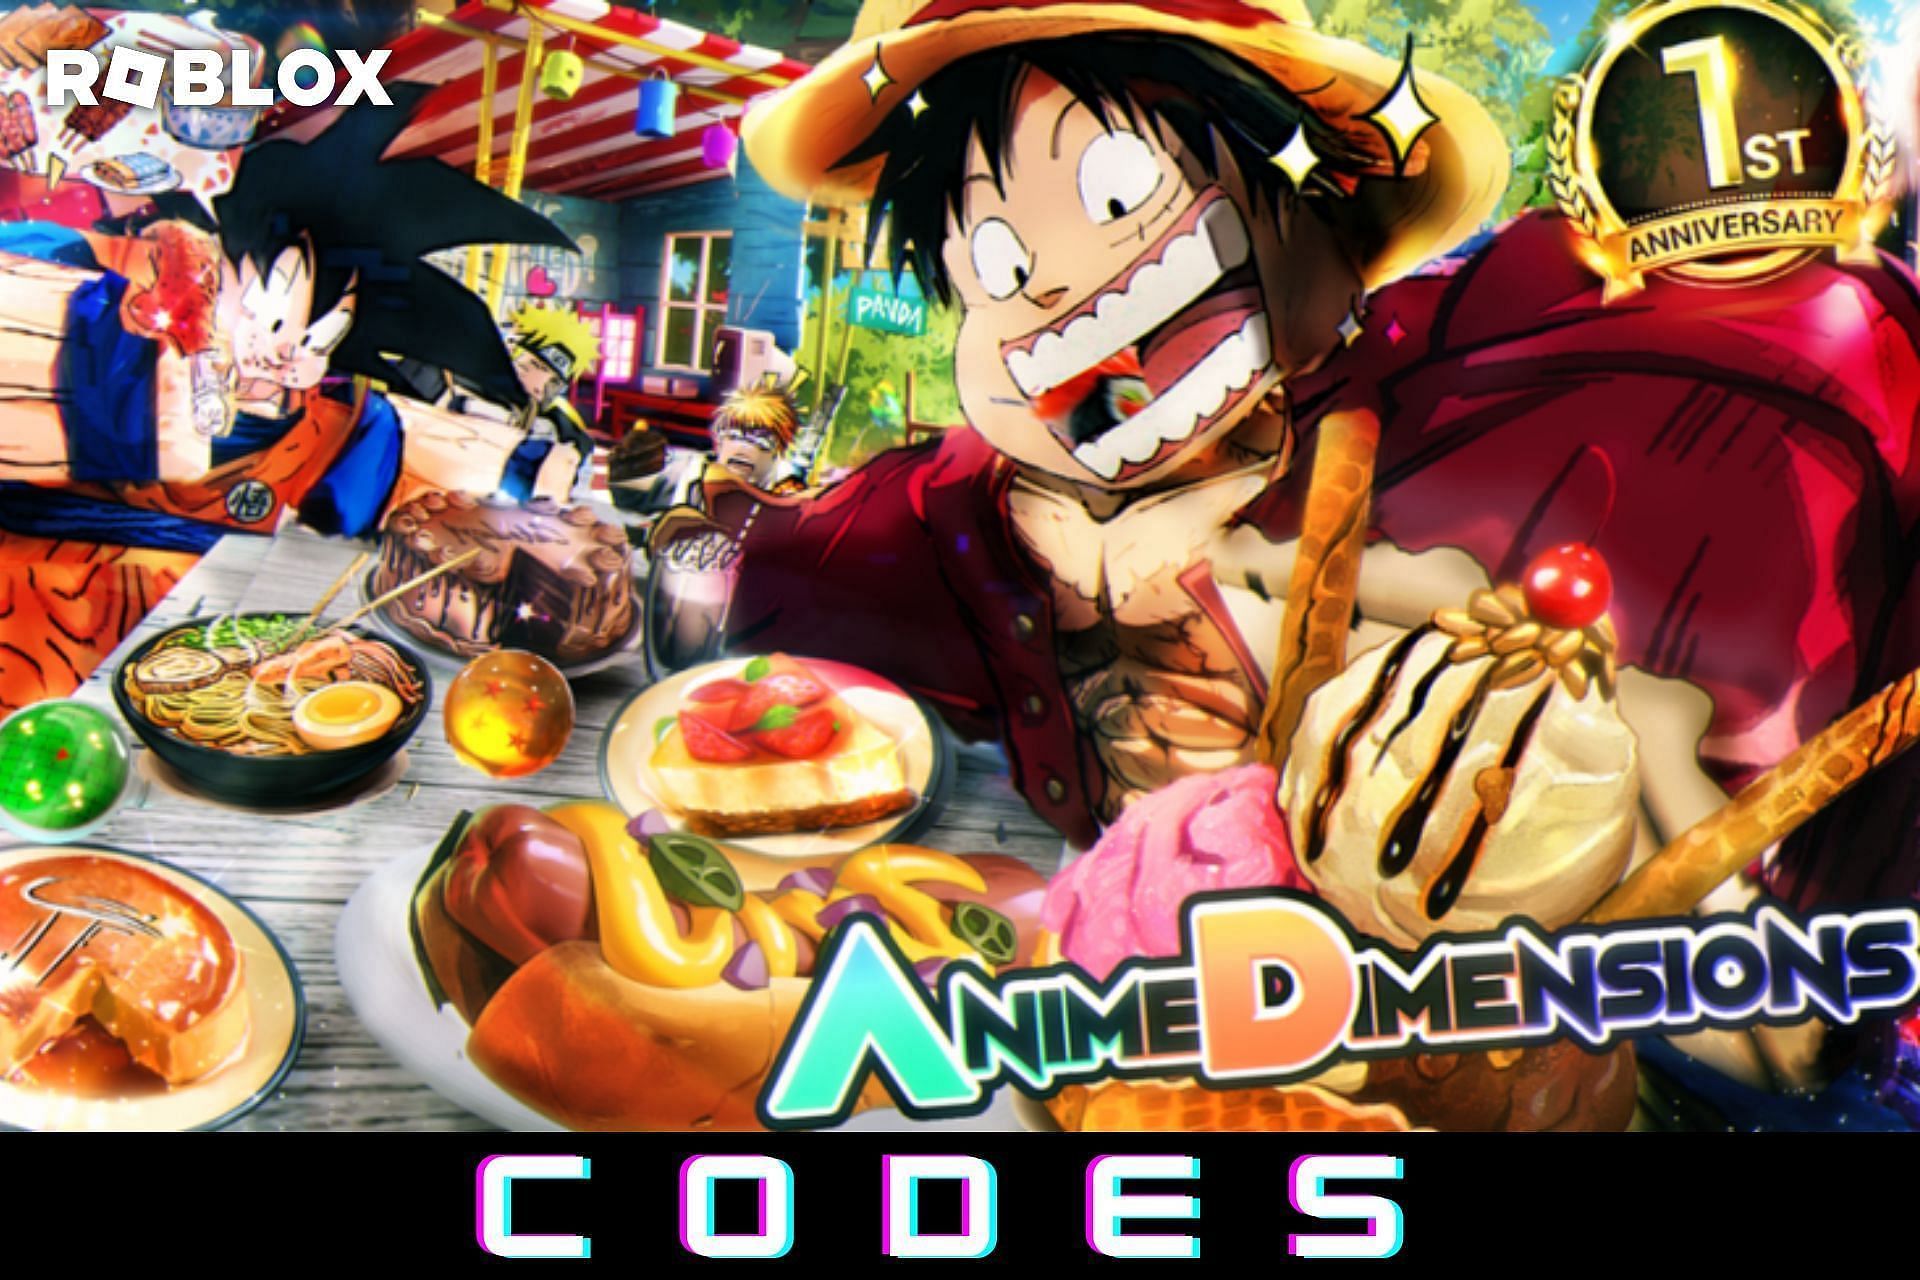 Codes, Roblox Anime Dimensions Wiki